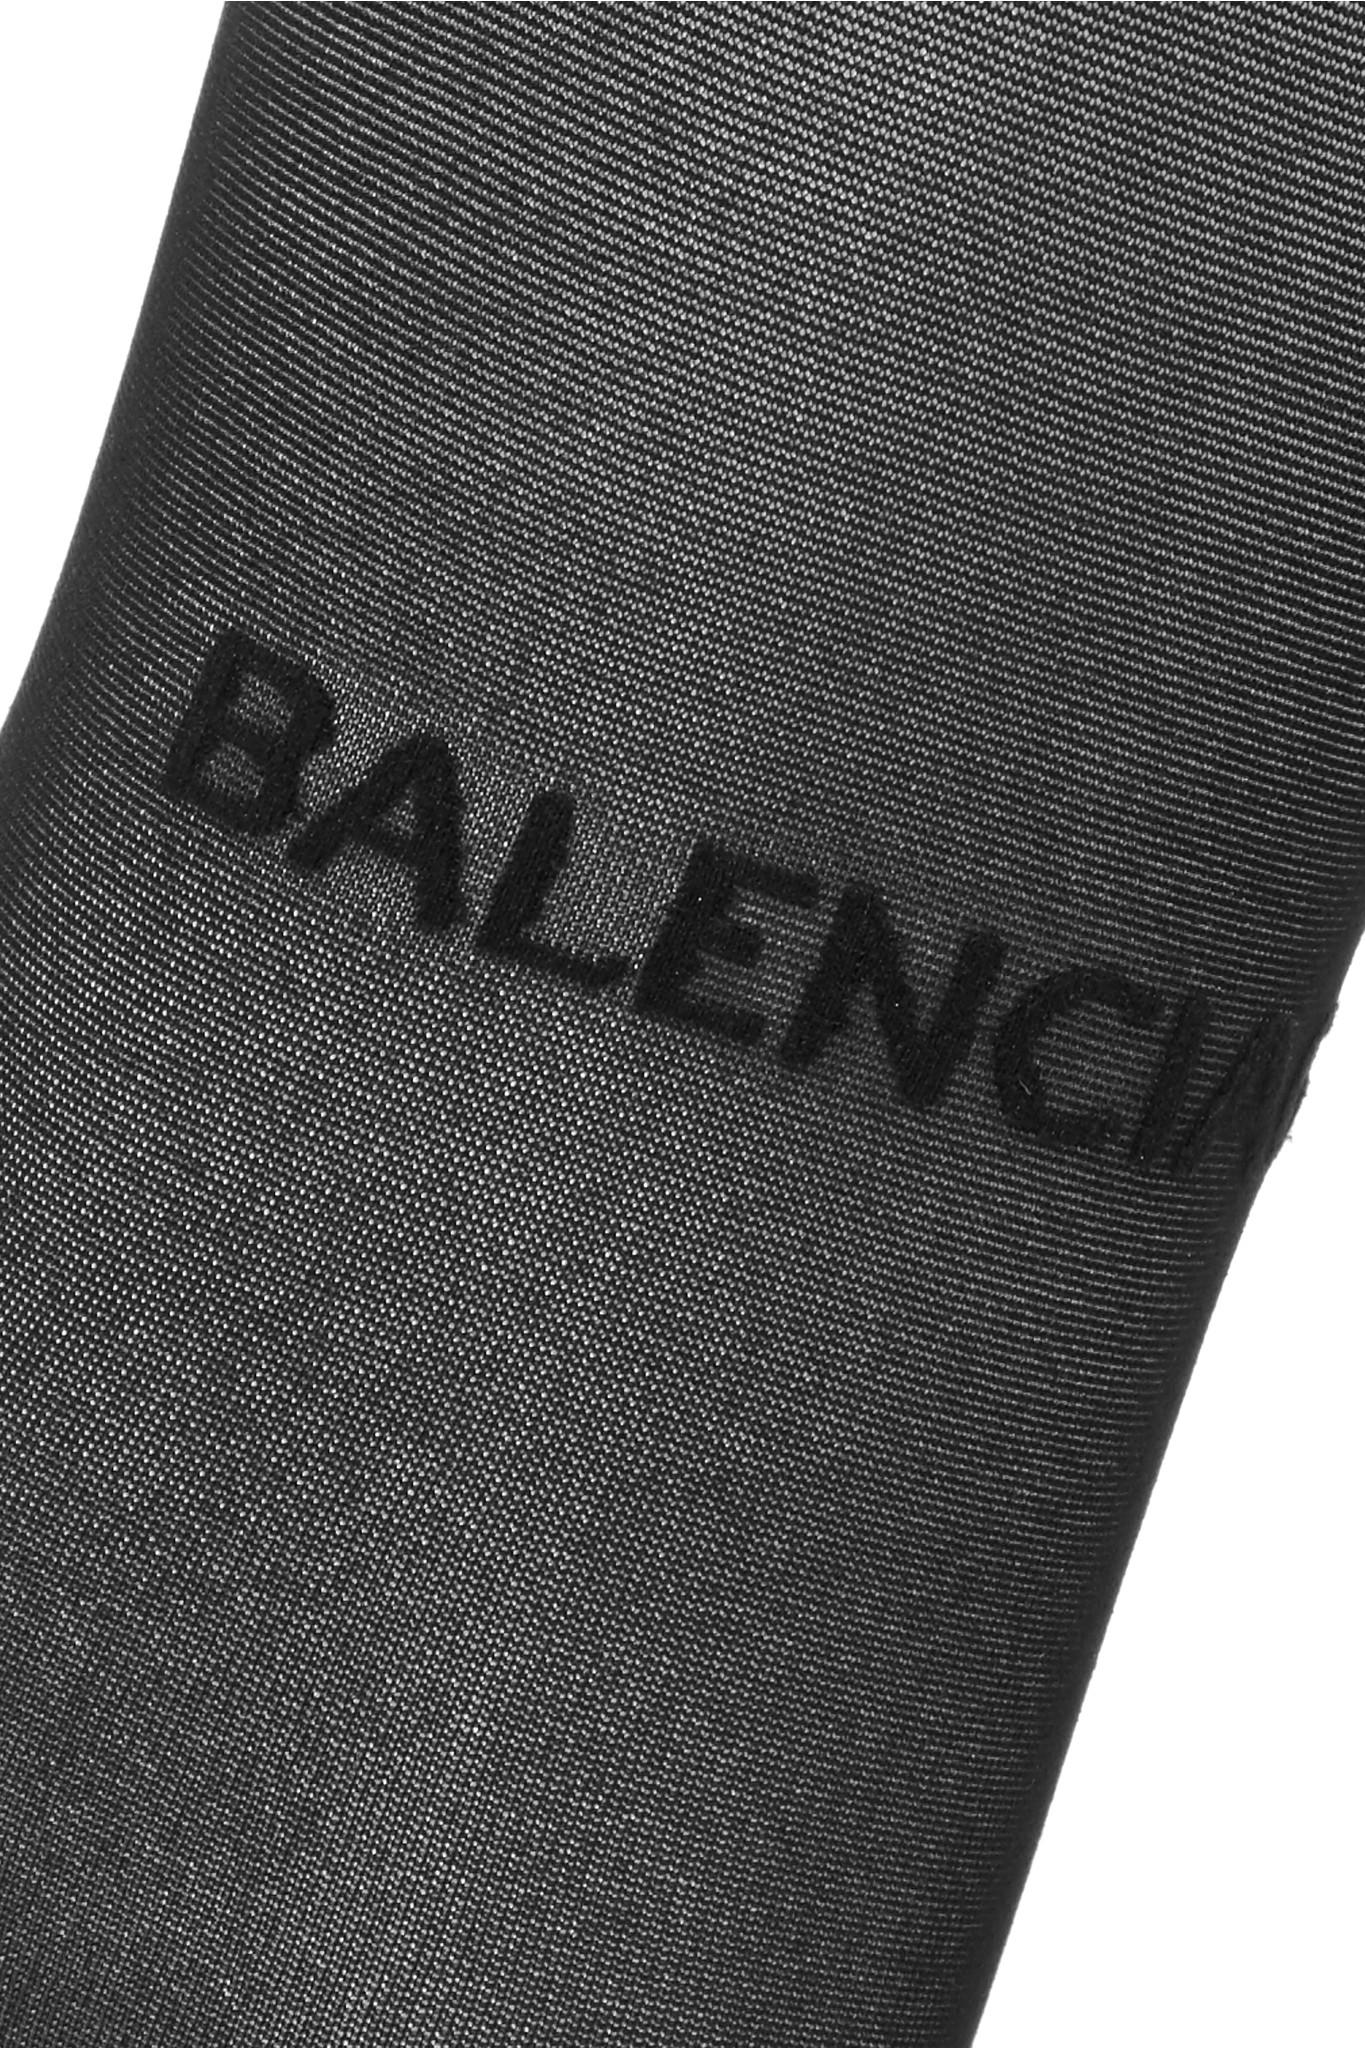 Balenciaga Intarsia Tights in Black - Lyst